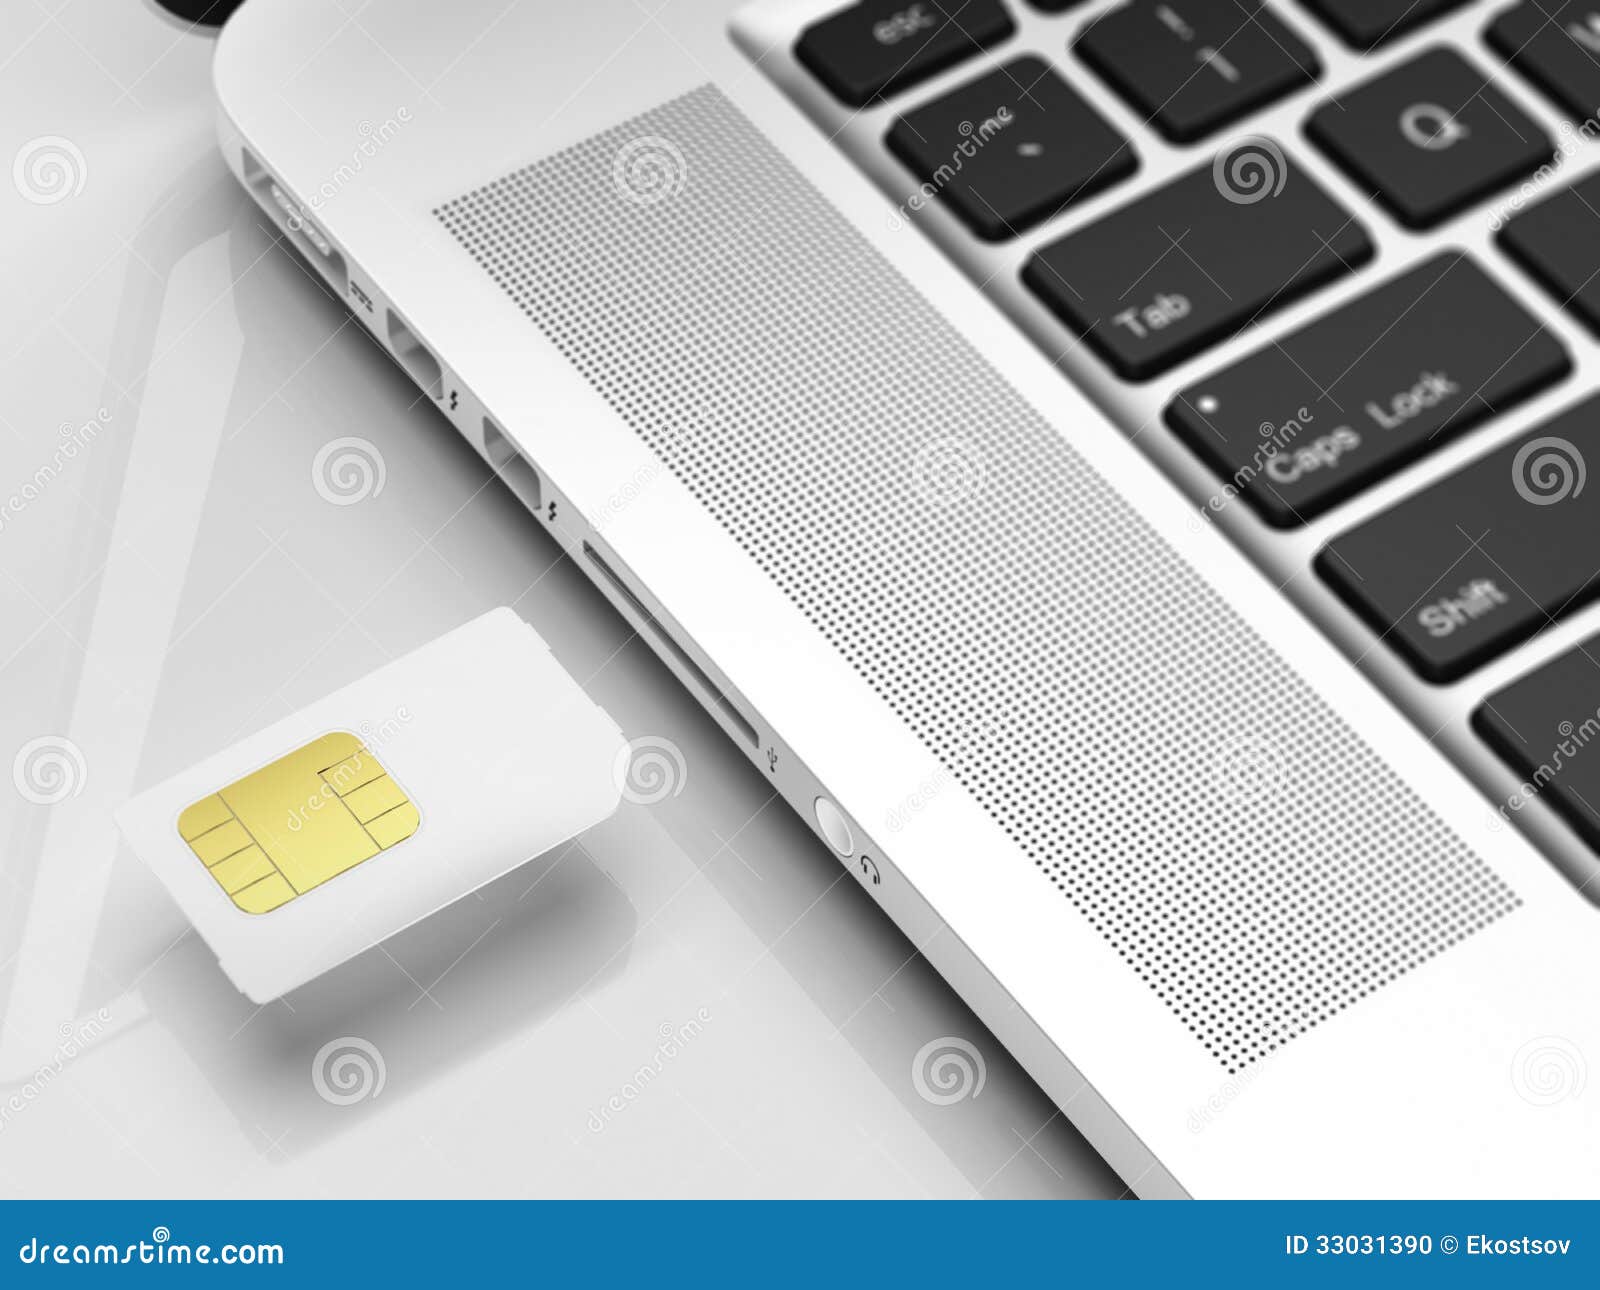 SIM Card And Laptop Stock Photo - Image: 33031390